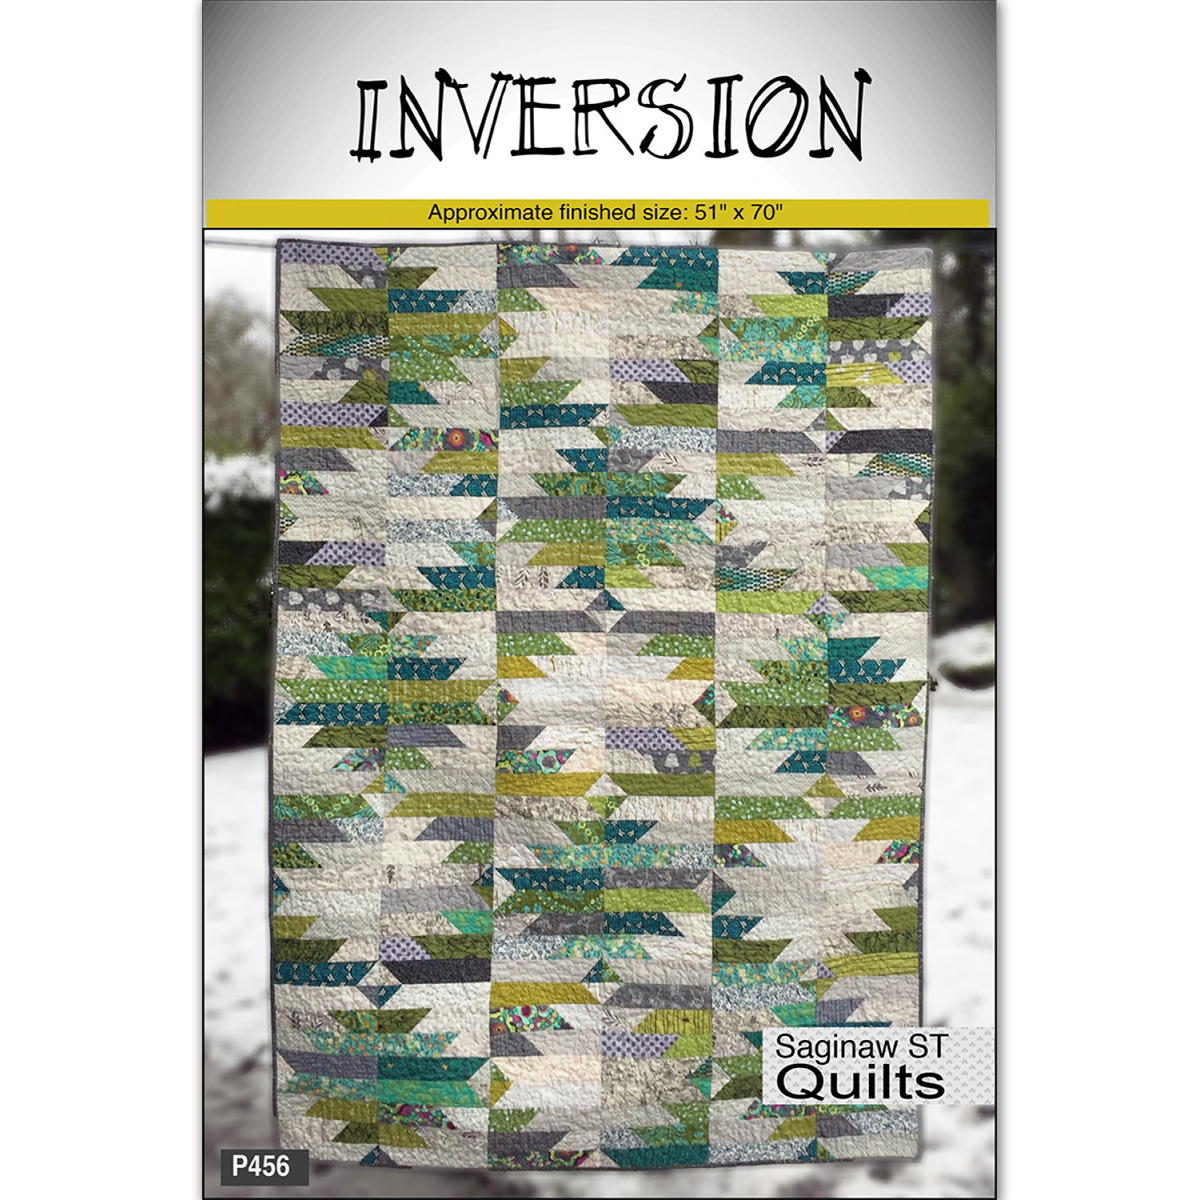 Inversion Quilt Pattern